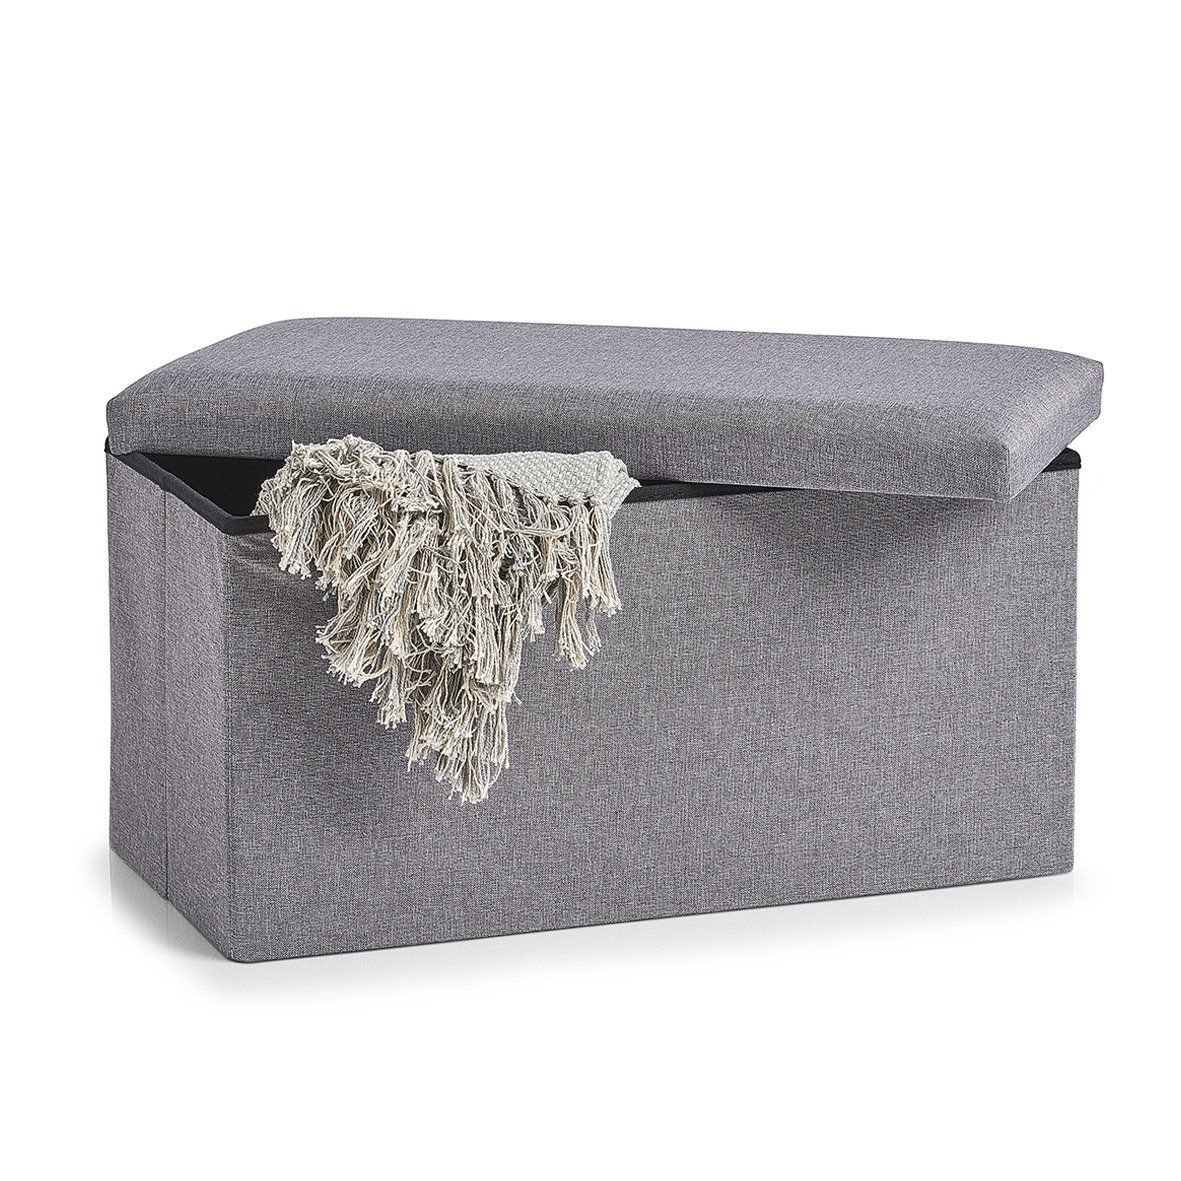 Skládací box, textilní pufa, 2 v 1, barva šedá, ZELLER - EMAKO.CZ s.r.o.